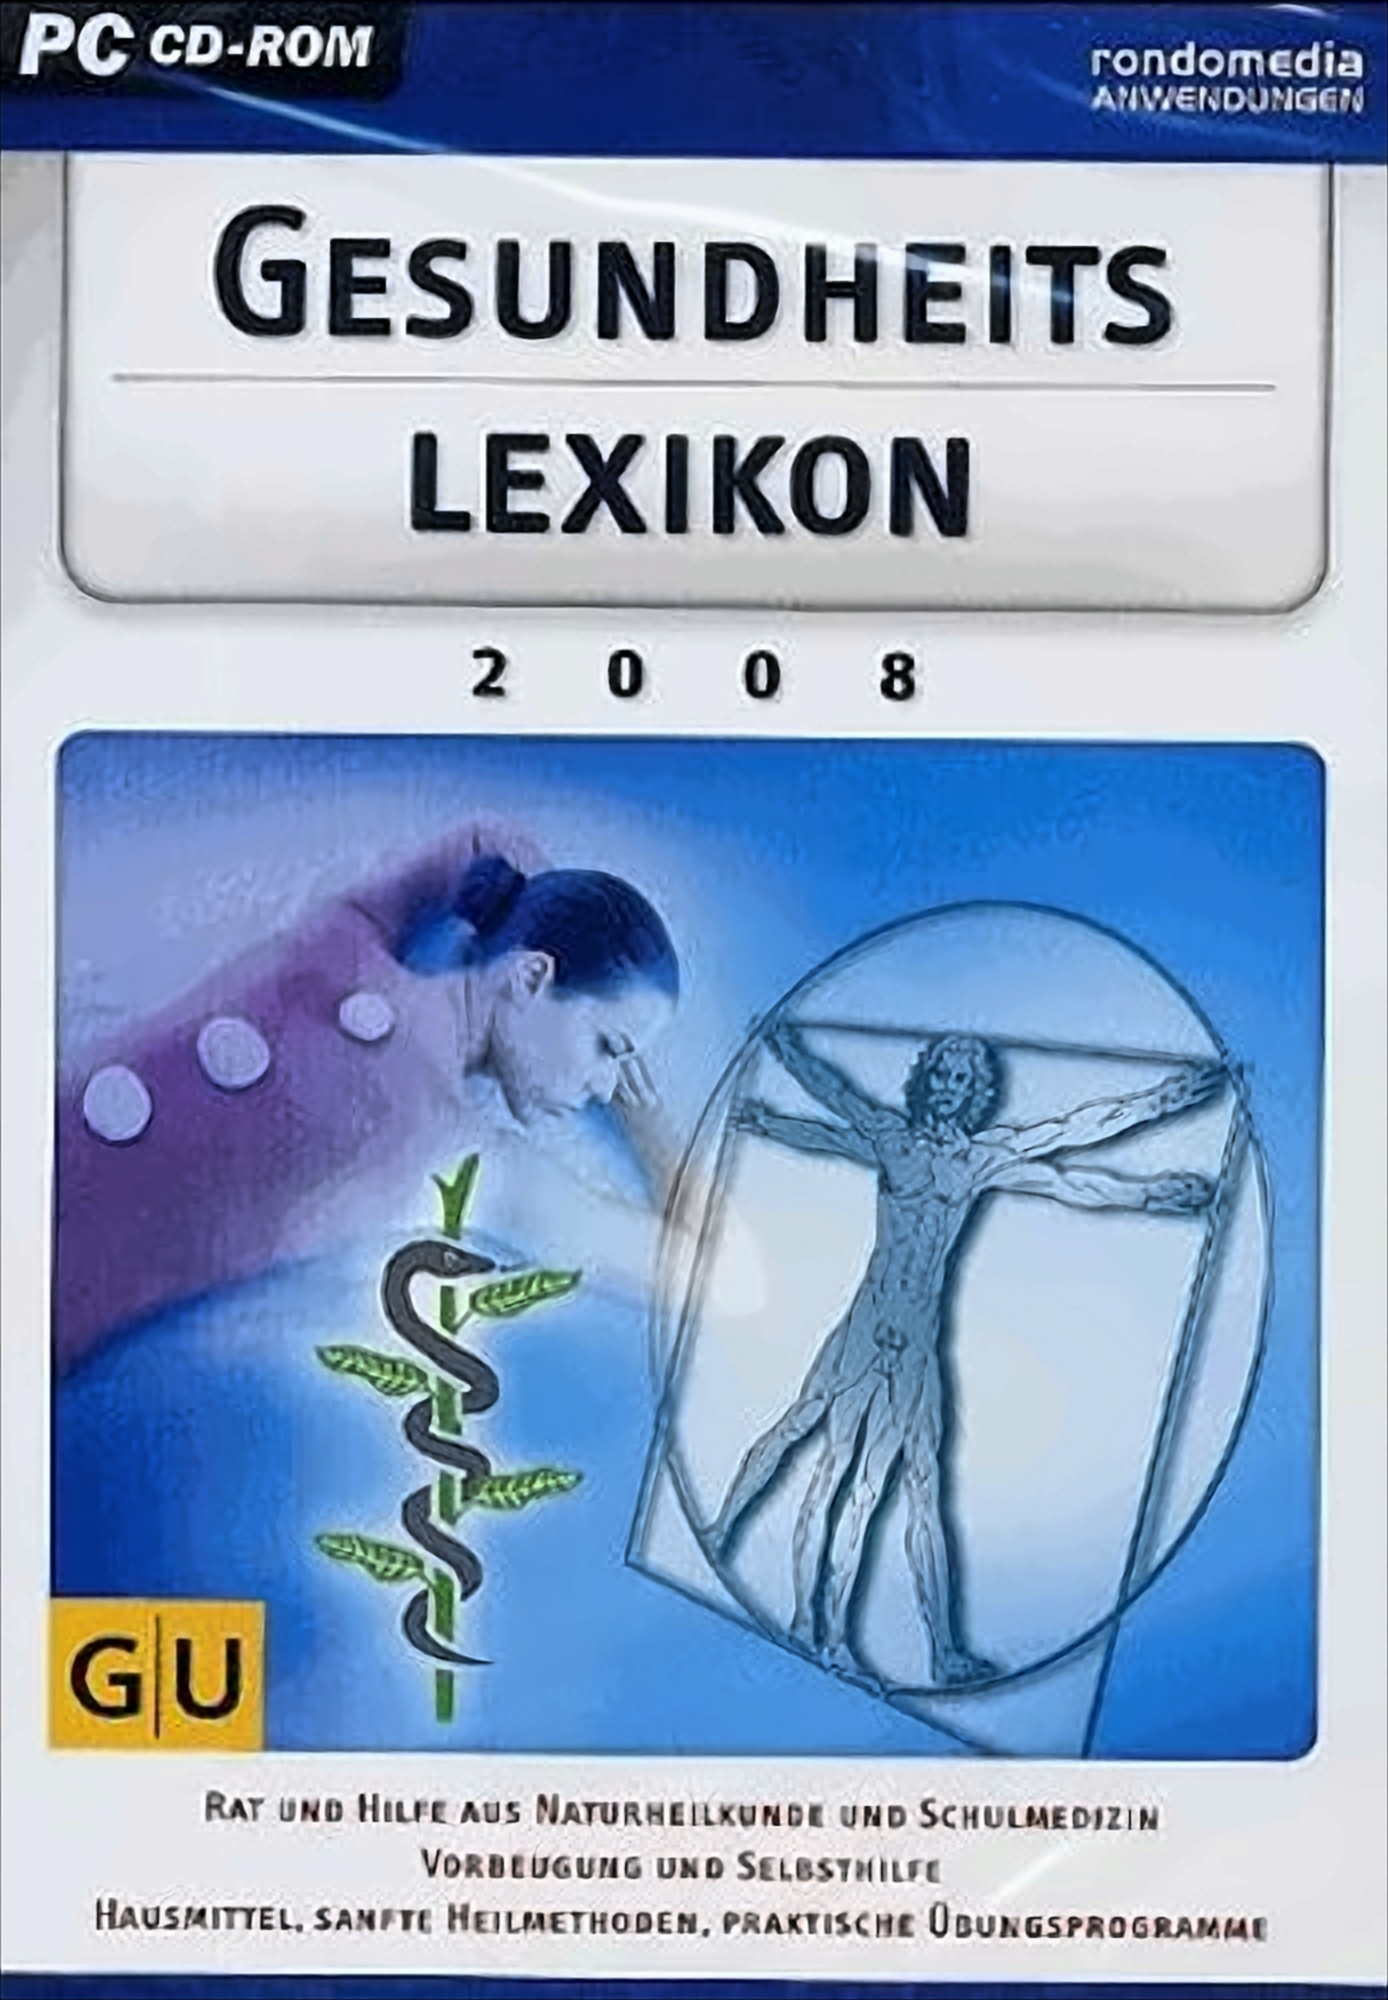 Gesundheitslexikon 2008 - [PC